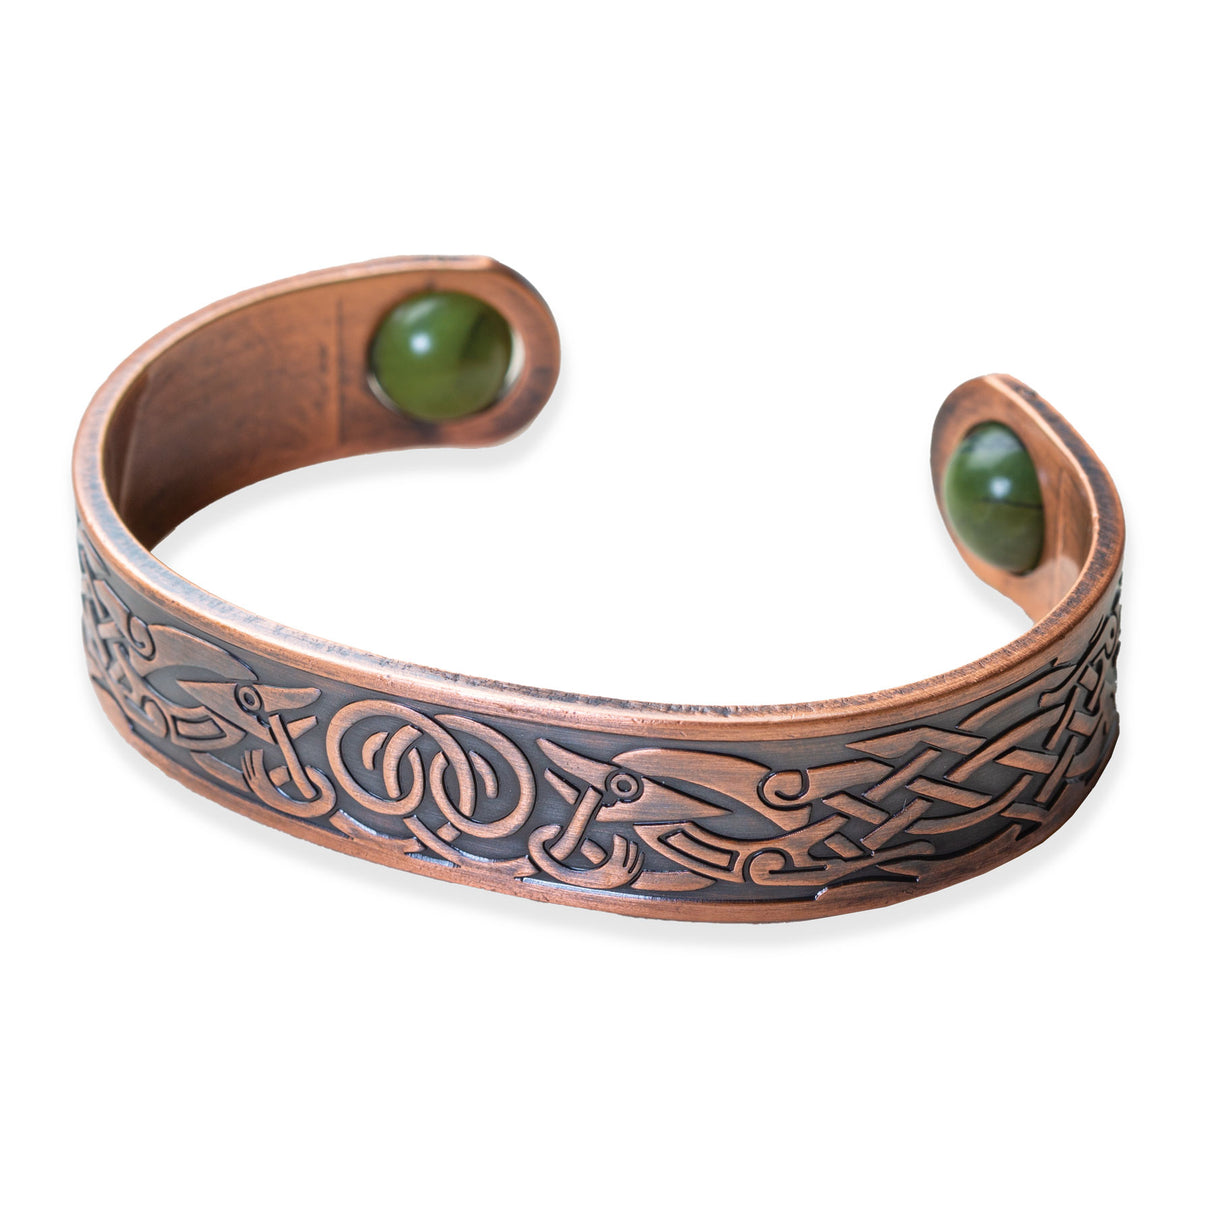 Copper Bracelet with Connemara Marble - Creative Irish Gifts